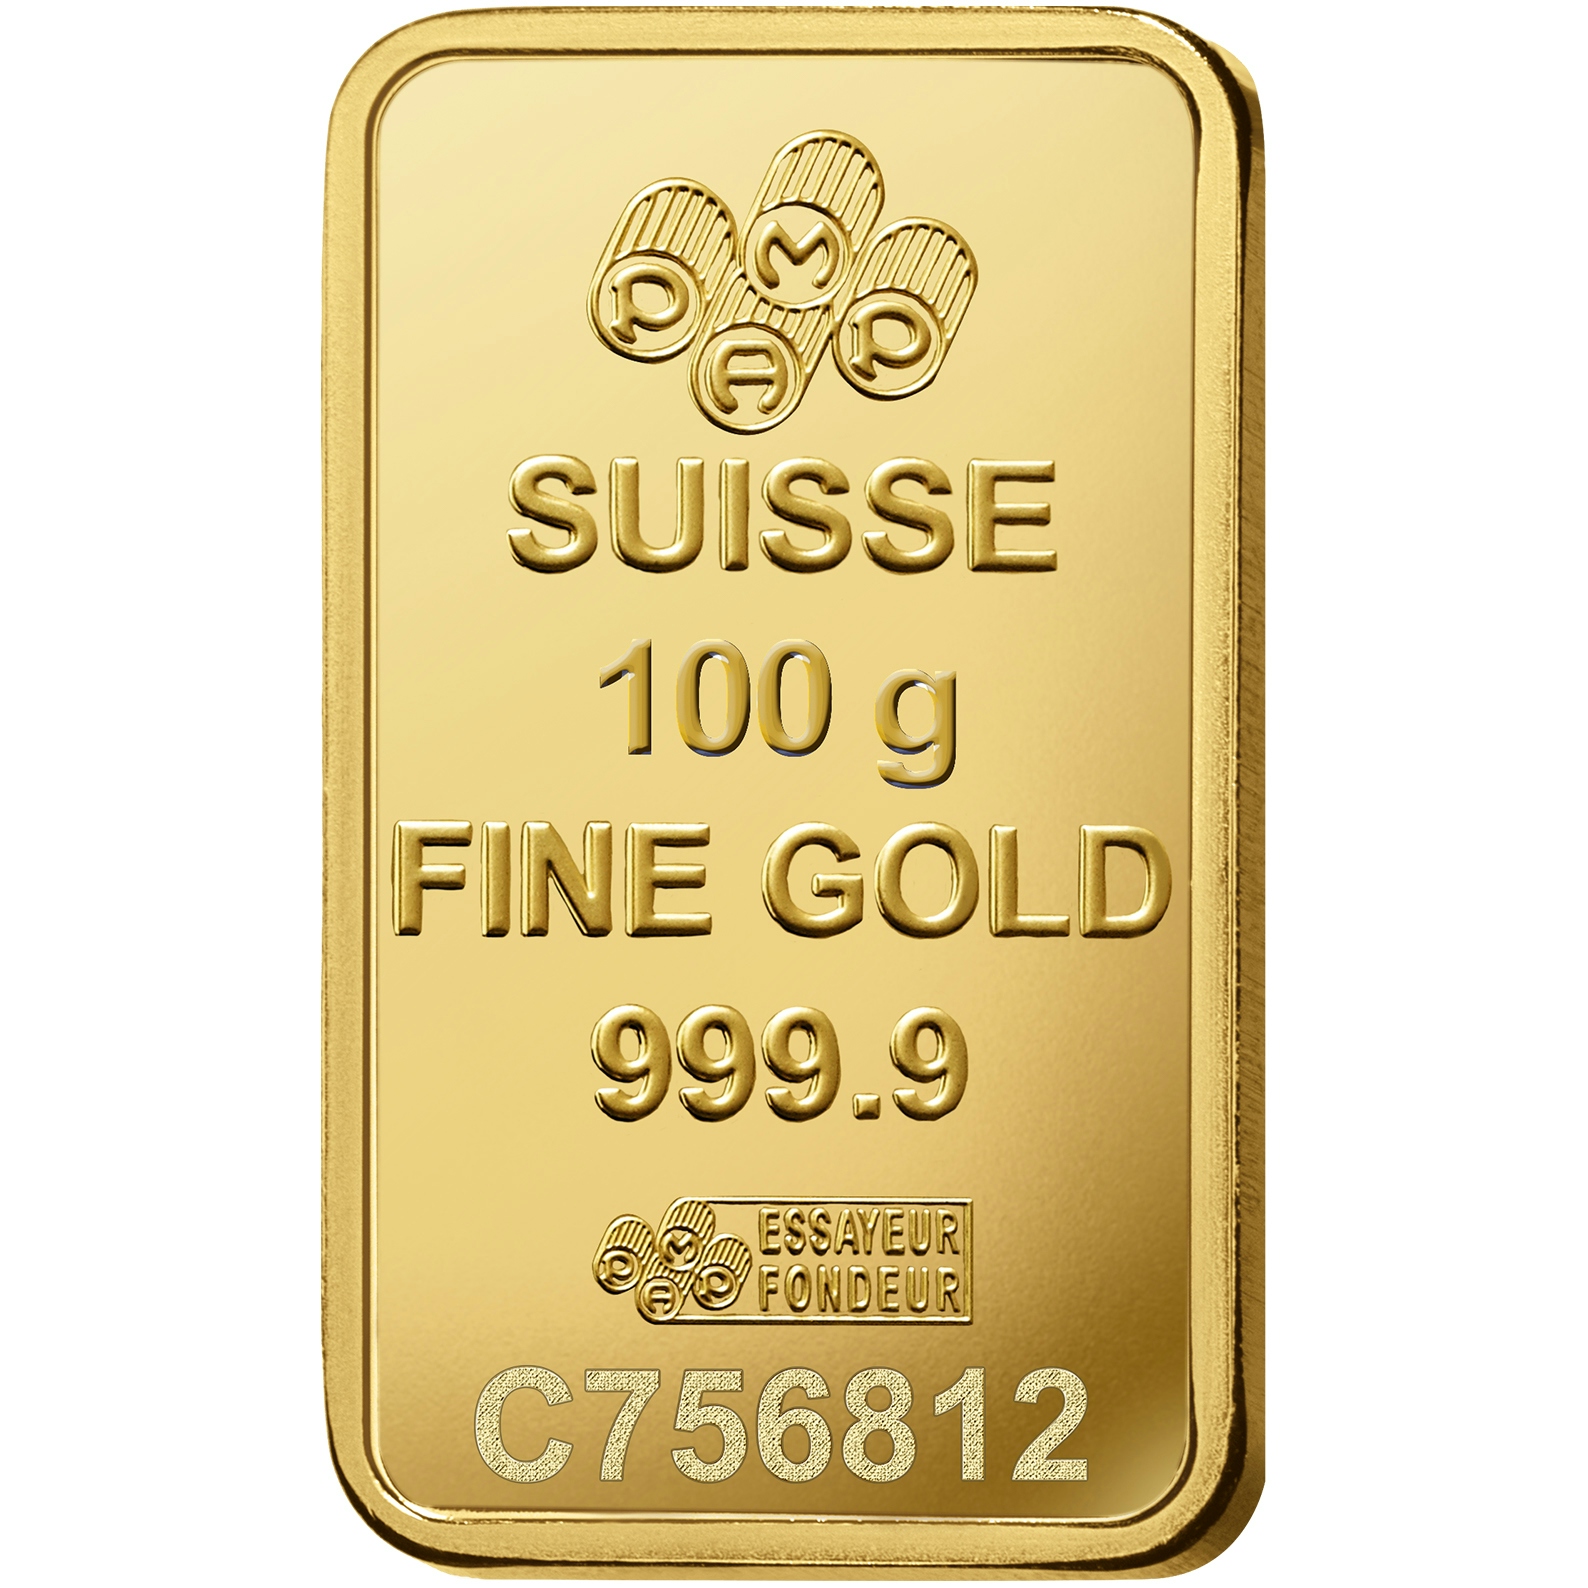 Invest in 100 gram Fine Gold Rosa - PAMP Swiss - Back